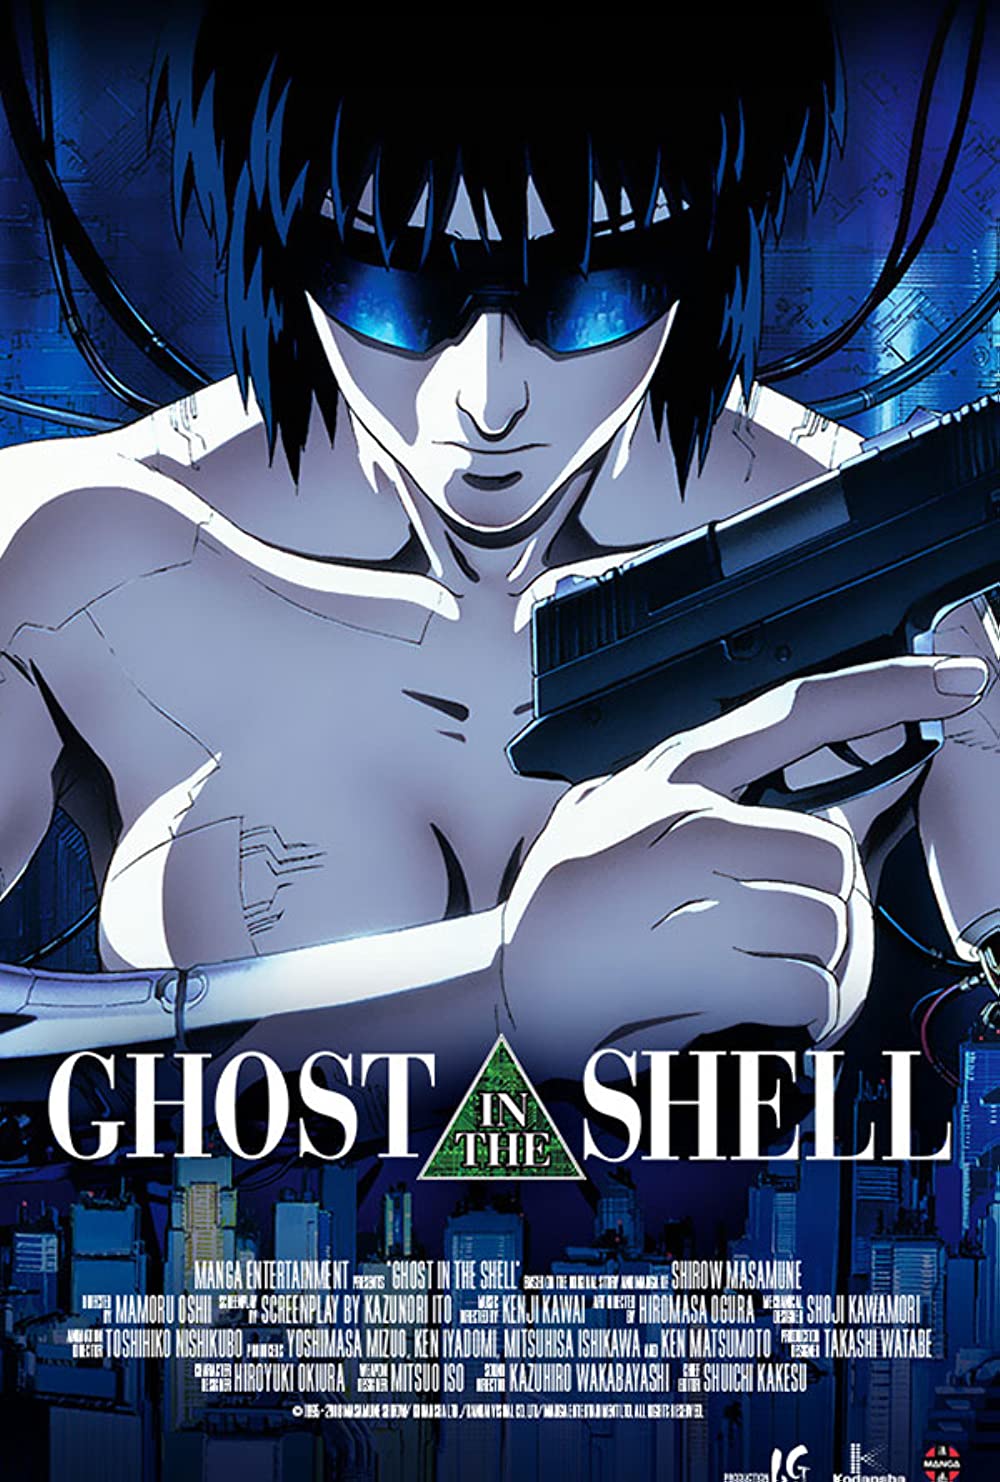 Filmbeschreibung zu Ghost in the Shell (1995)